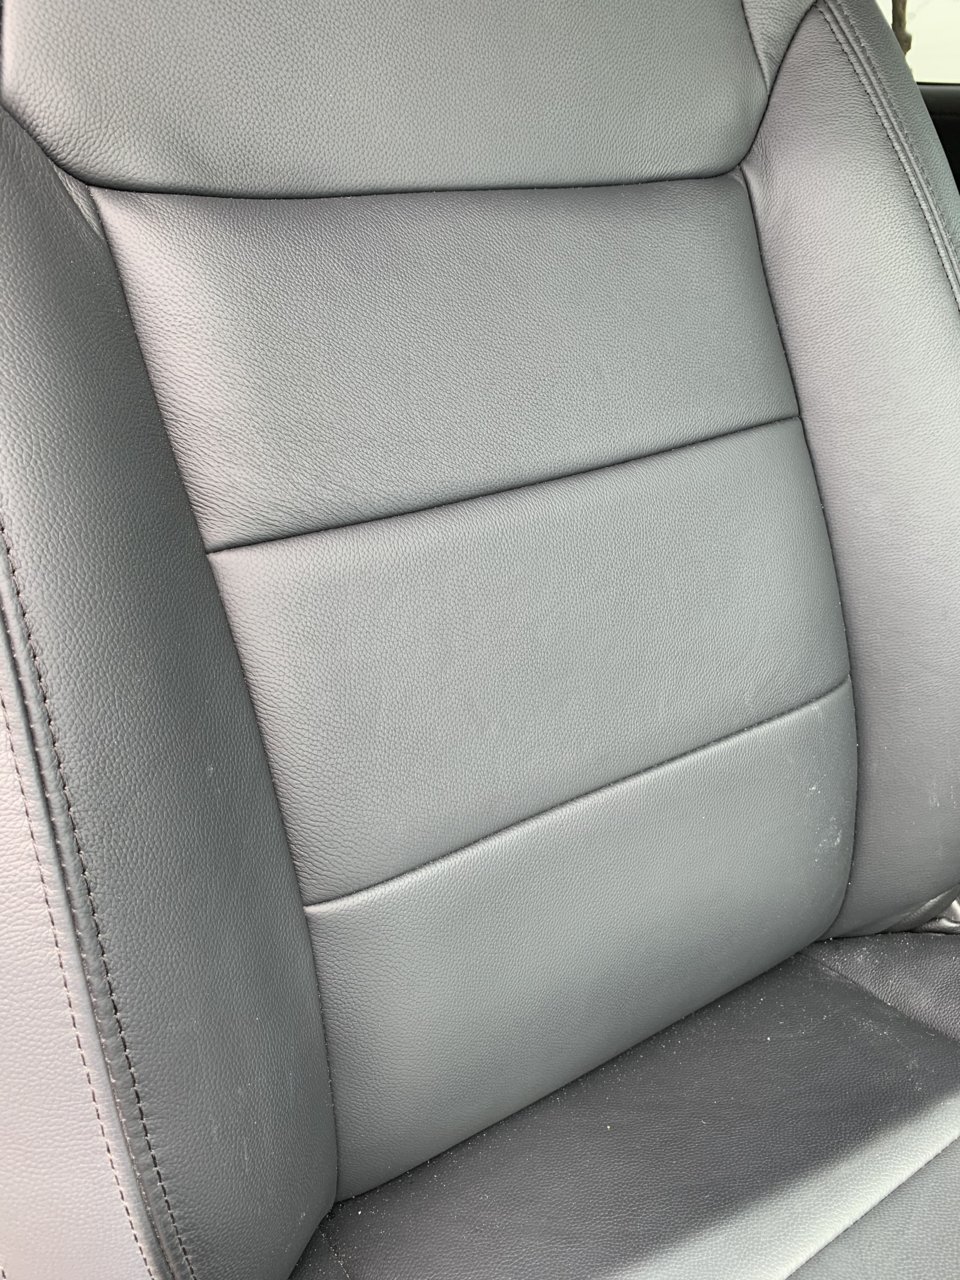 Seat Upgrades? | Page 2 | Toyota Tundra Forum